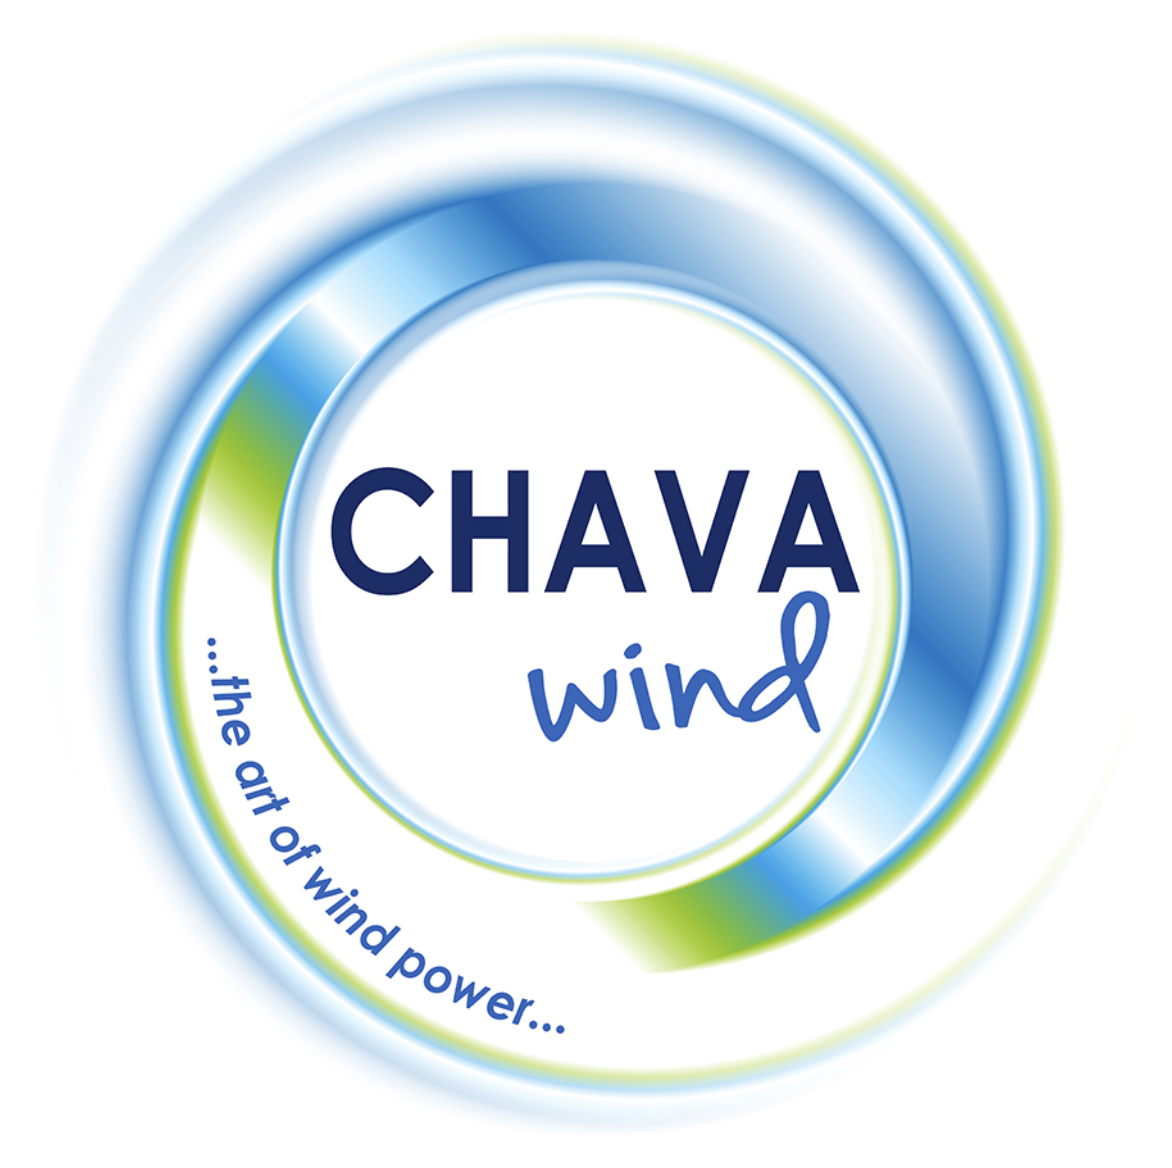 CHAVA Wind logo